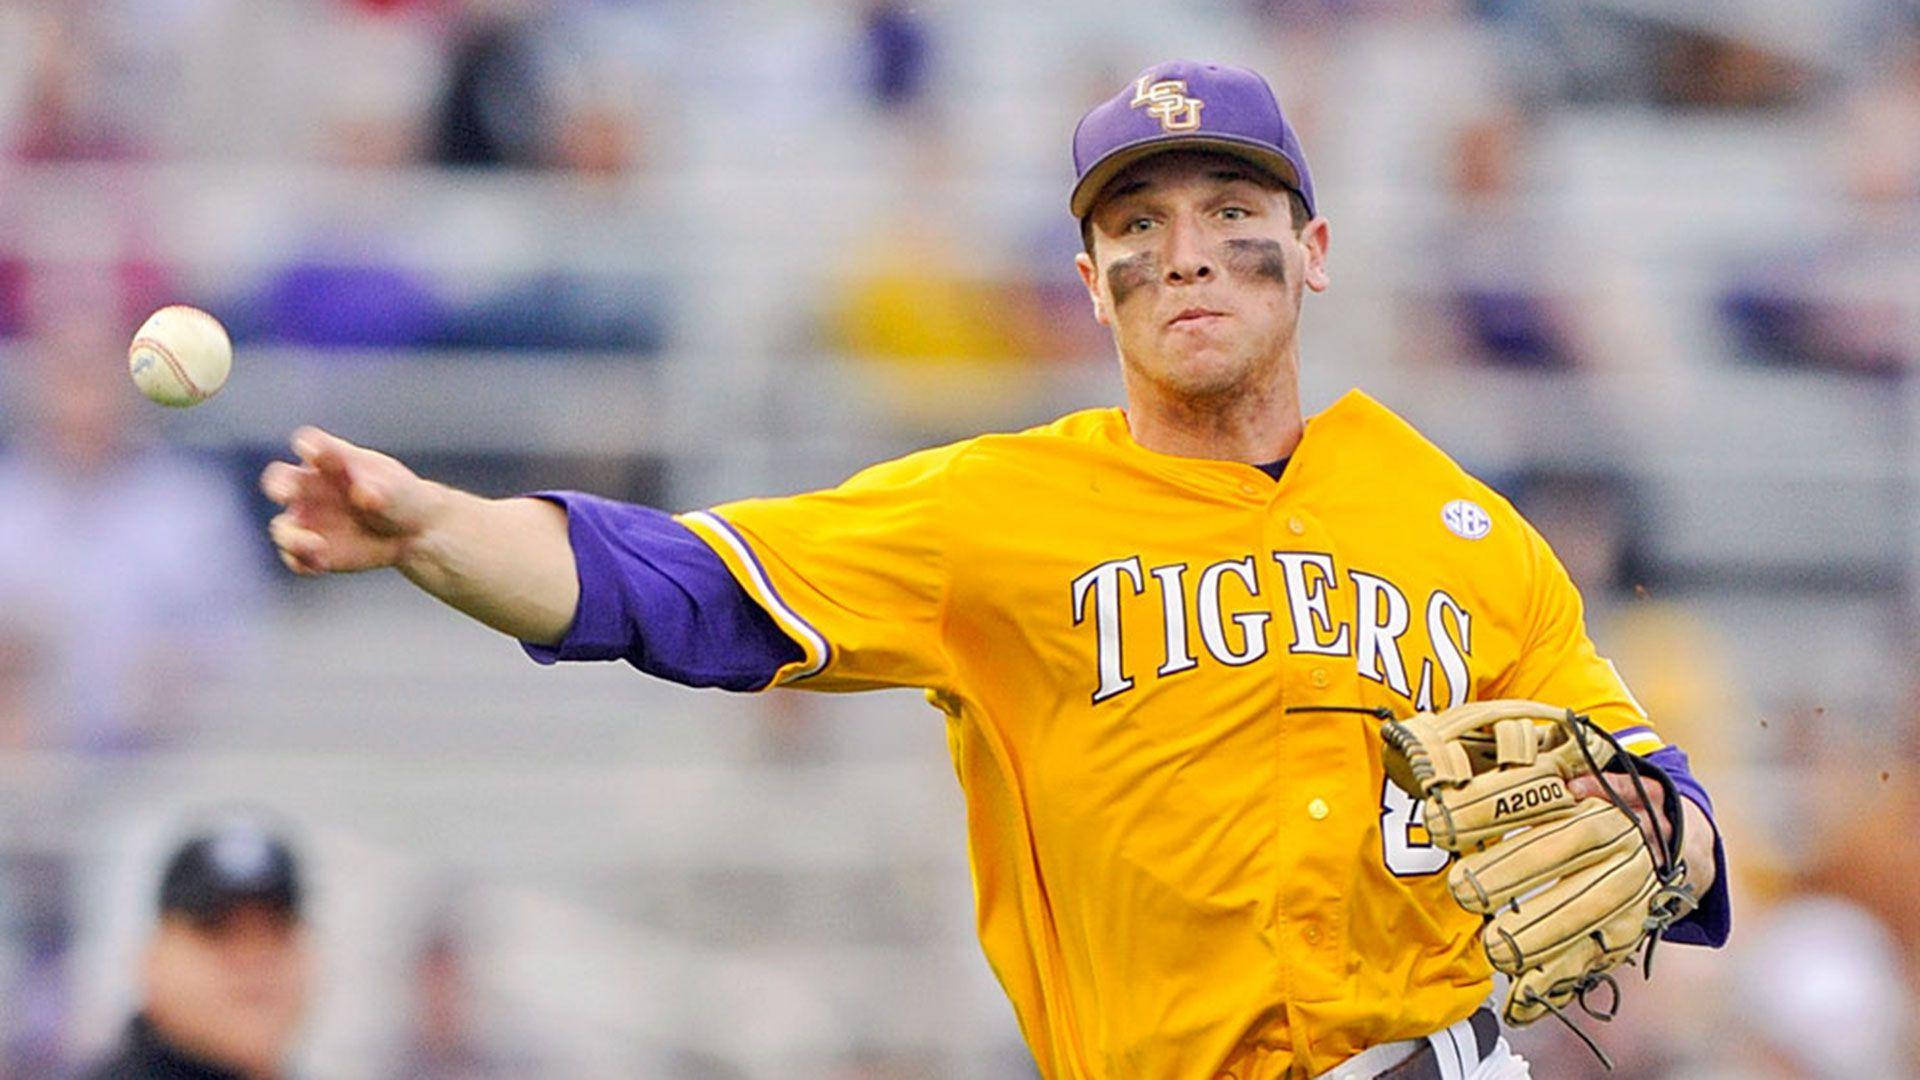 Alex Bregman Catching Ball In Tigers Uniform Background